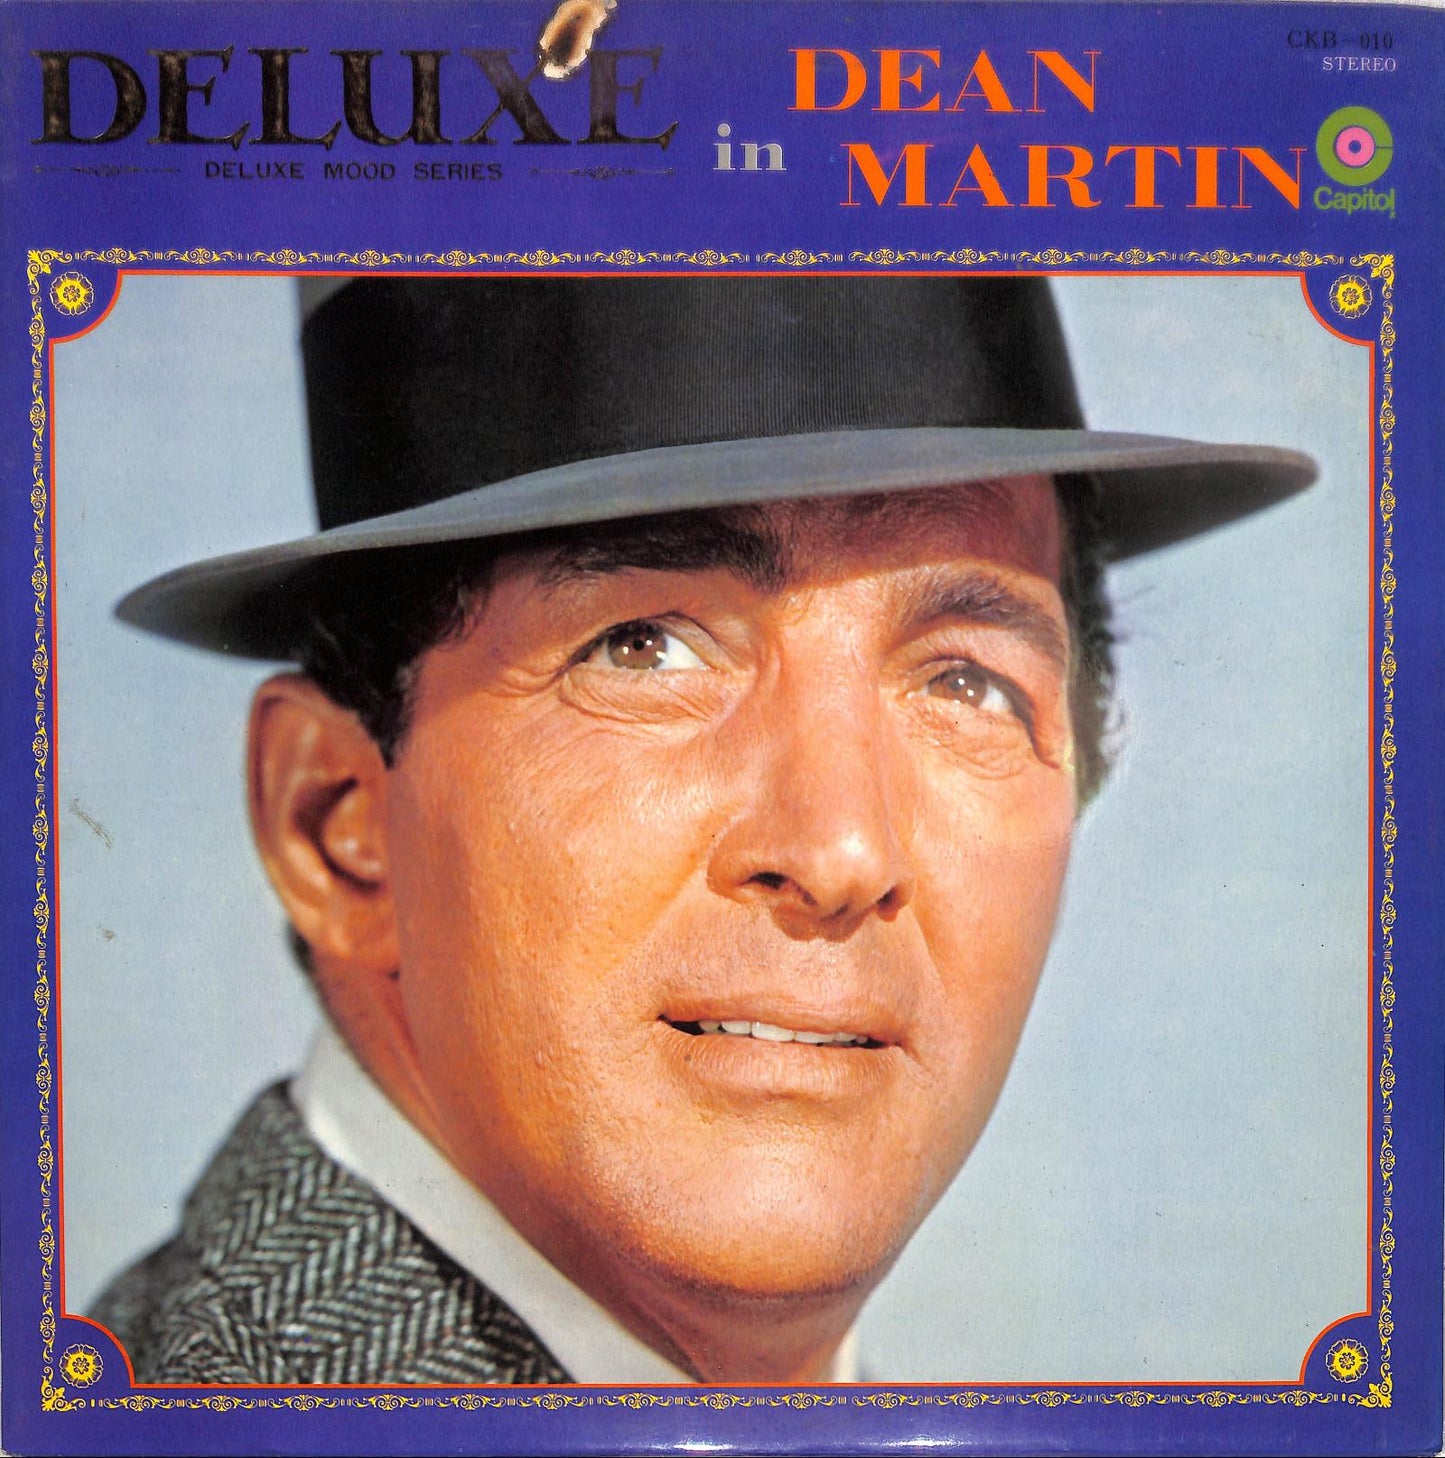 DEAN MARTIN - Deluxe In Dean Martin